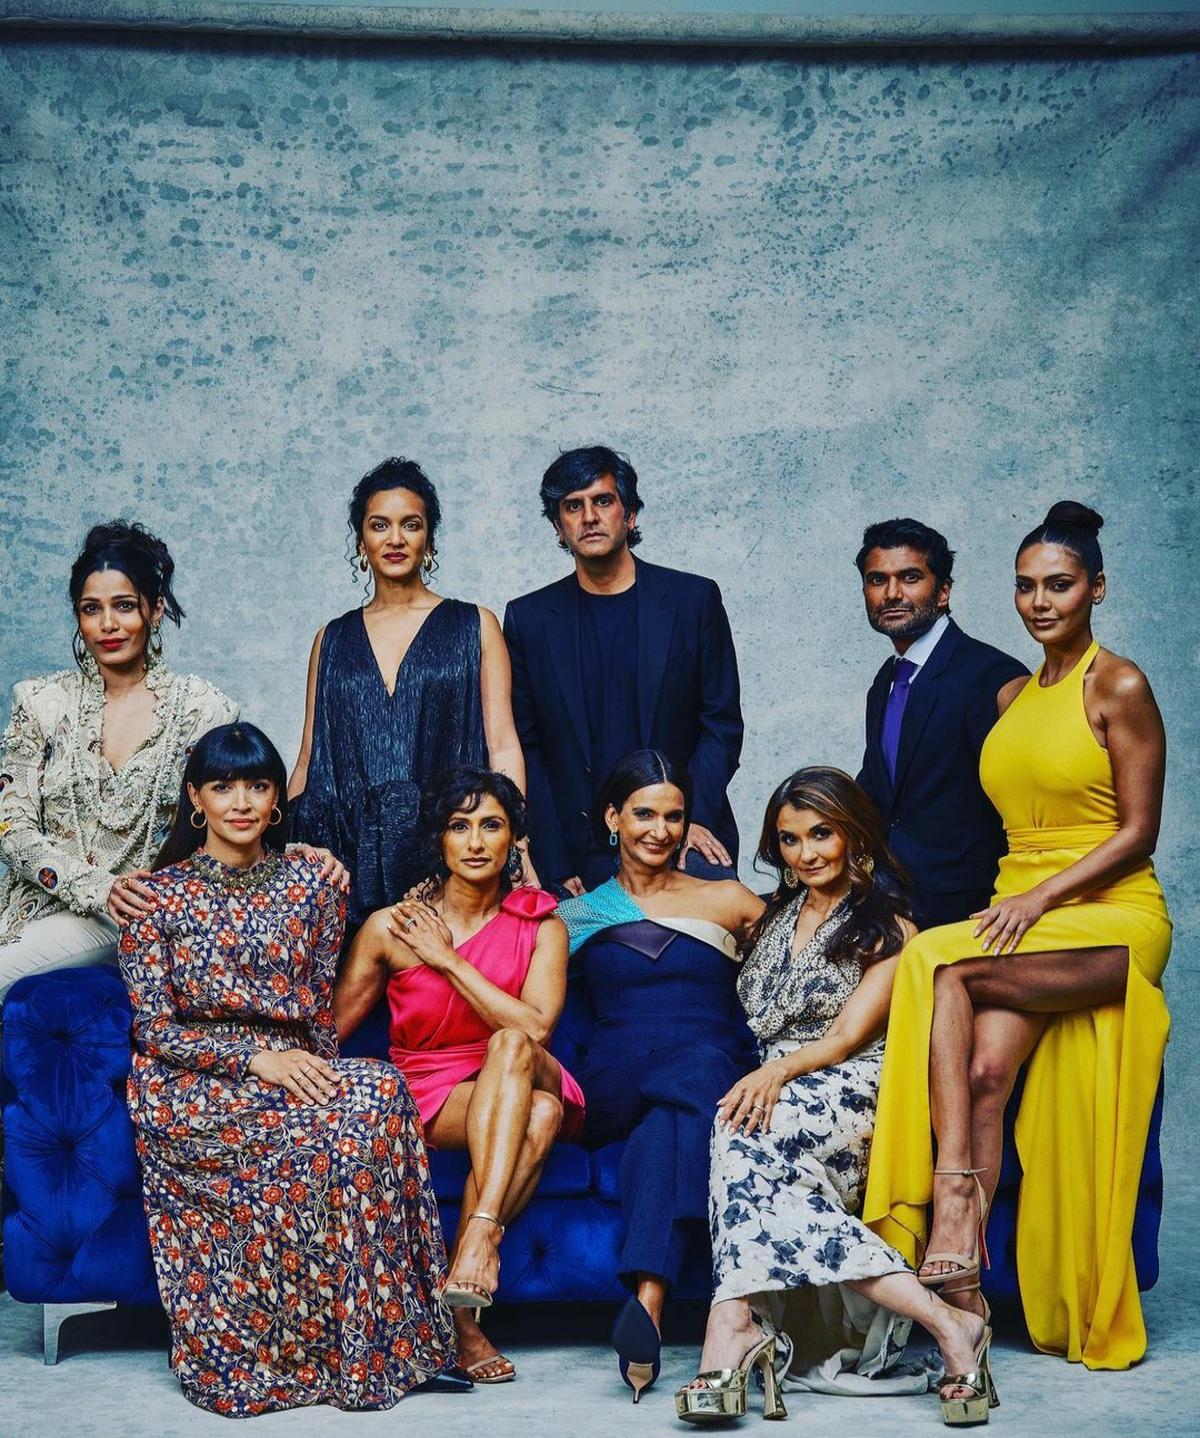 Poorna Jagannathan with her South Asian peers, including Freida Pinto, musician Anoushka Shankar, singer-songwriter Siddhartha Khosla, Sendhil Ramamurthy, Esha Gupta, Anjali Bhimani, Sarayu Blue, and Hannah Simone